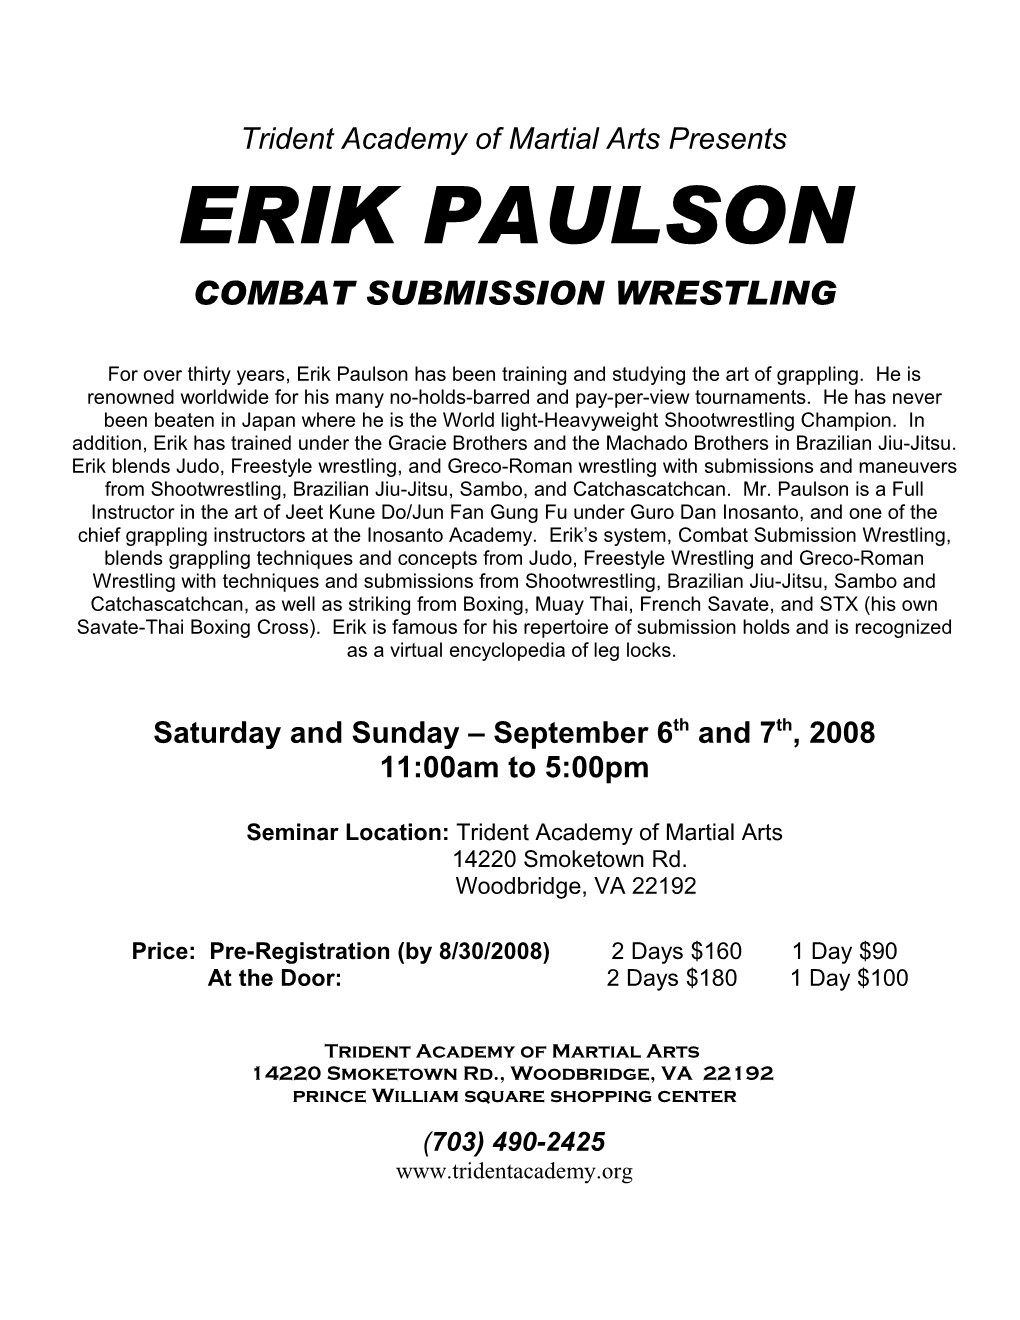 Erik Paulson Combat Submission Wrestling